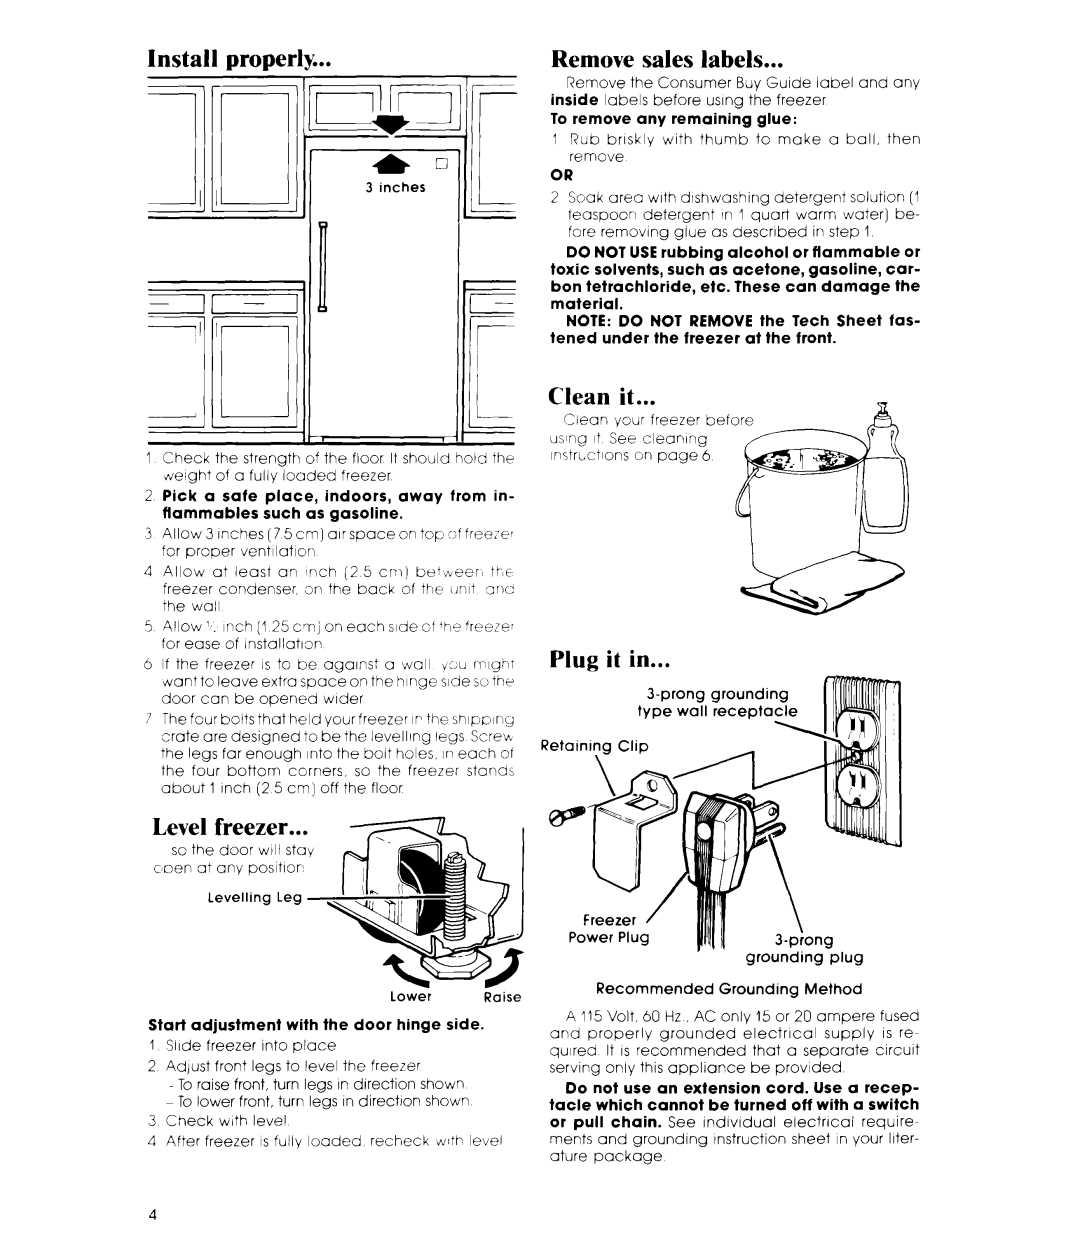 Whirlpool EV130N manual Install properly, Remove sales labels, Clean it, Plug it in, Level freezer, 3I- II a-1 ”L 